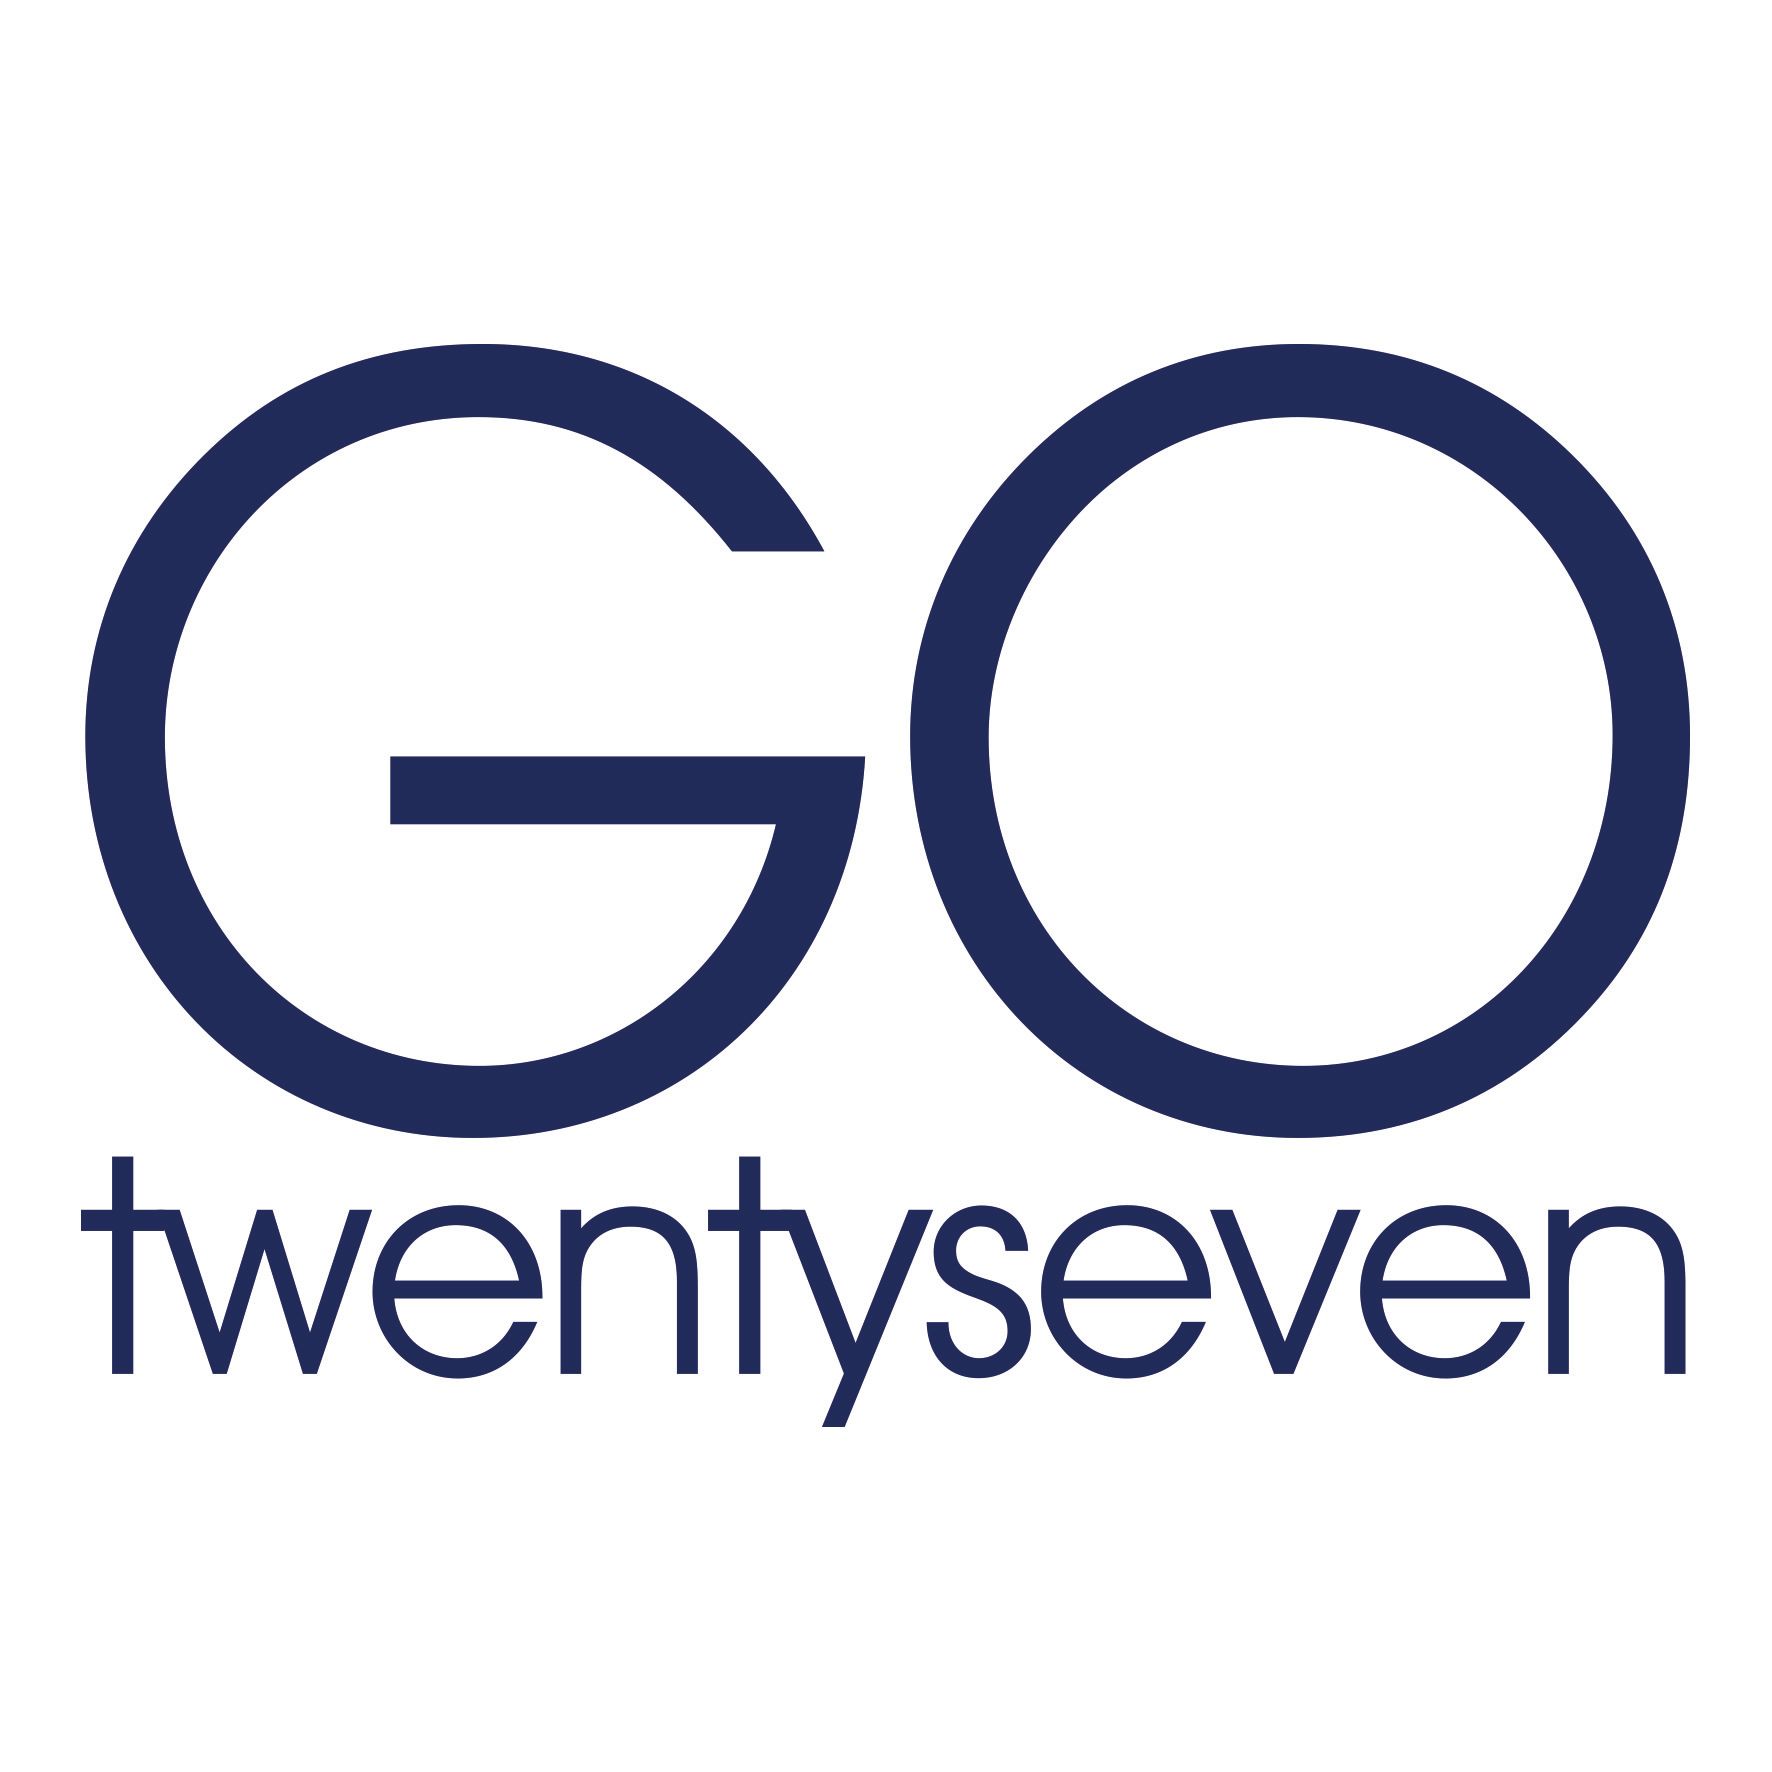 Go Twenty Seven Ltd